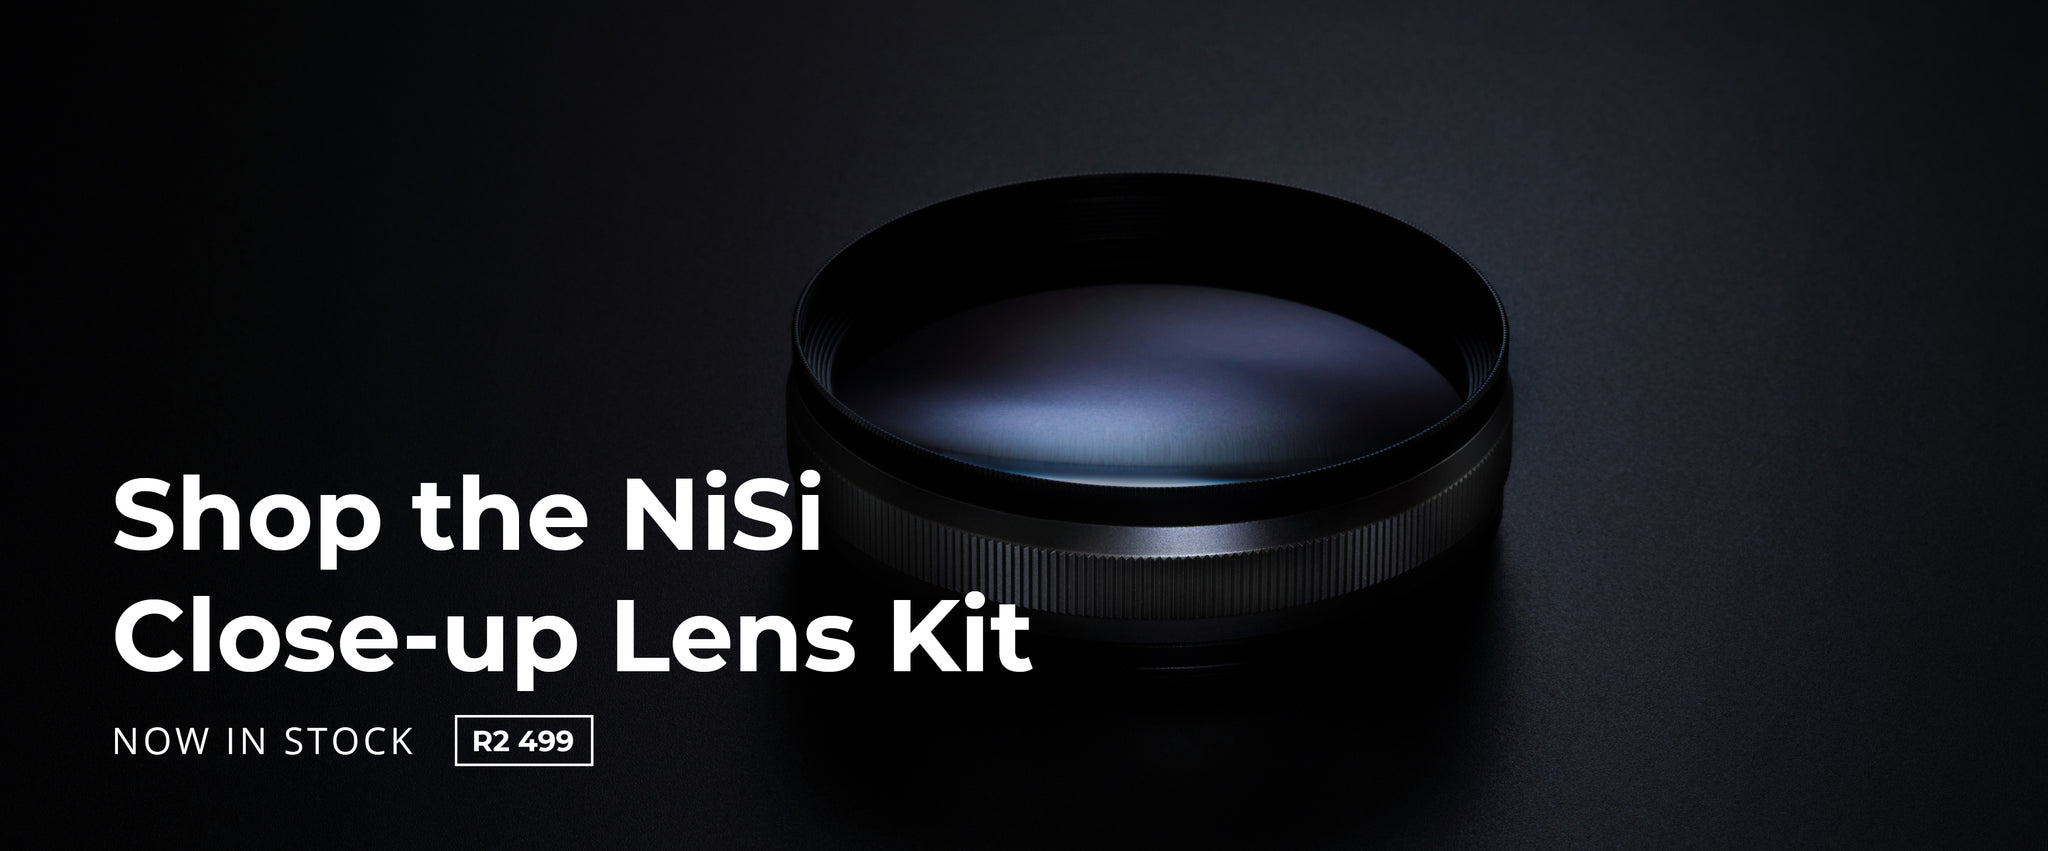 NiSi Close Up Lens Kit South Africa